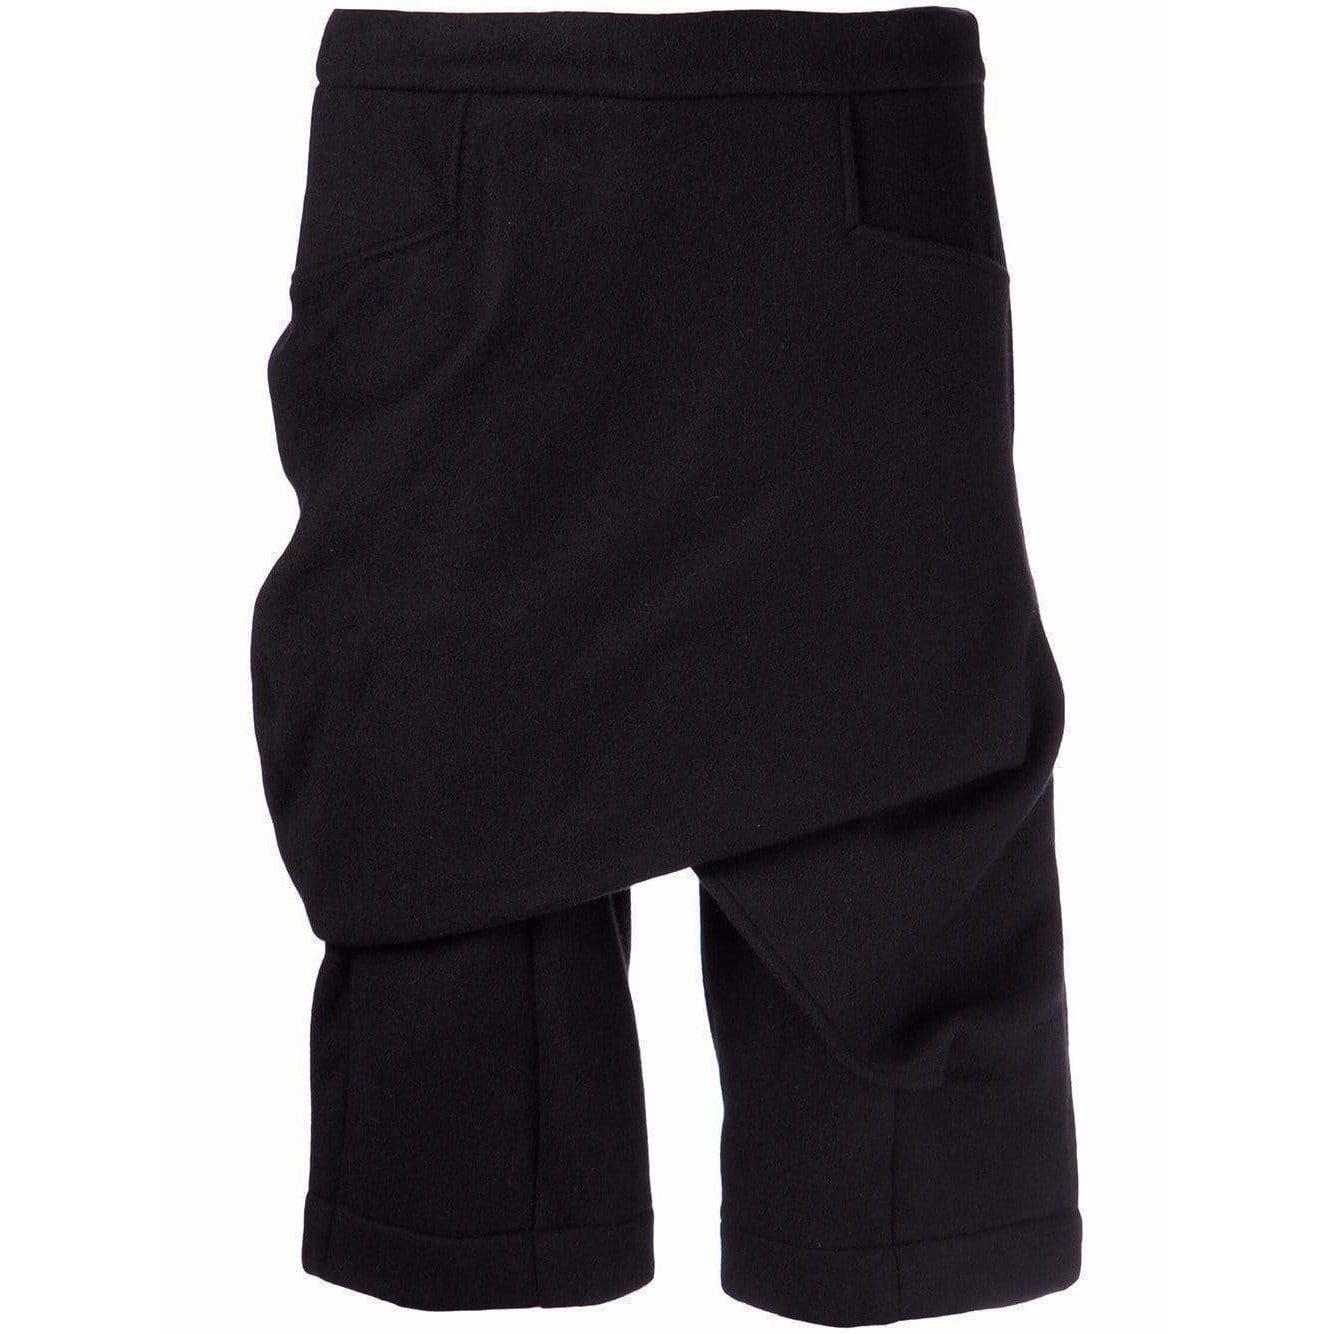 drop-crotch-shorts Womens Shorts Black